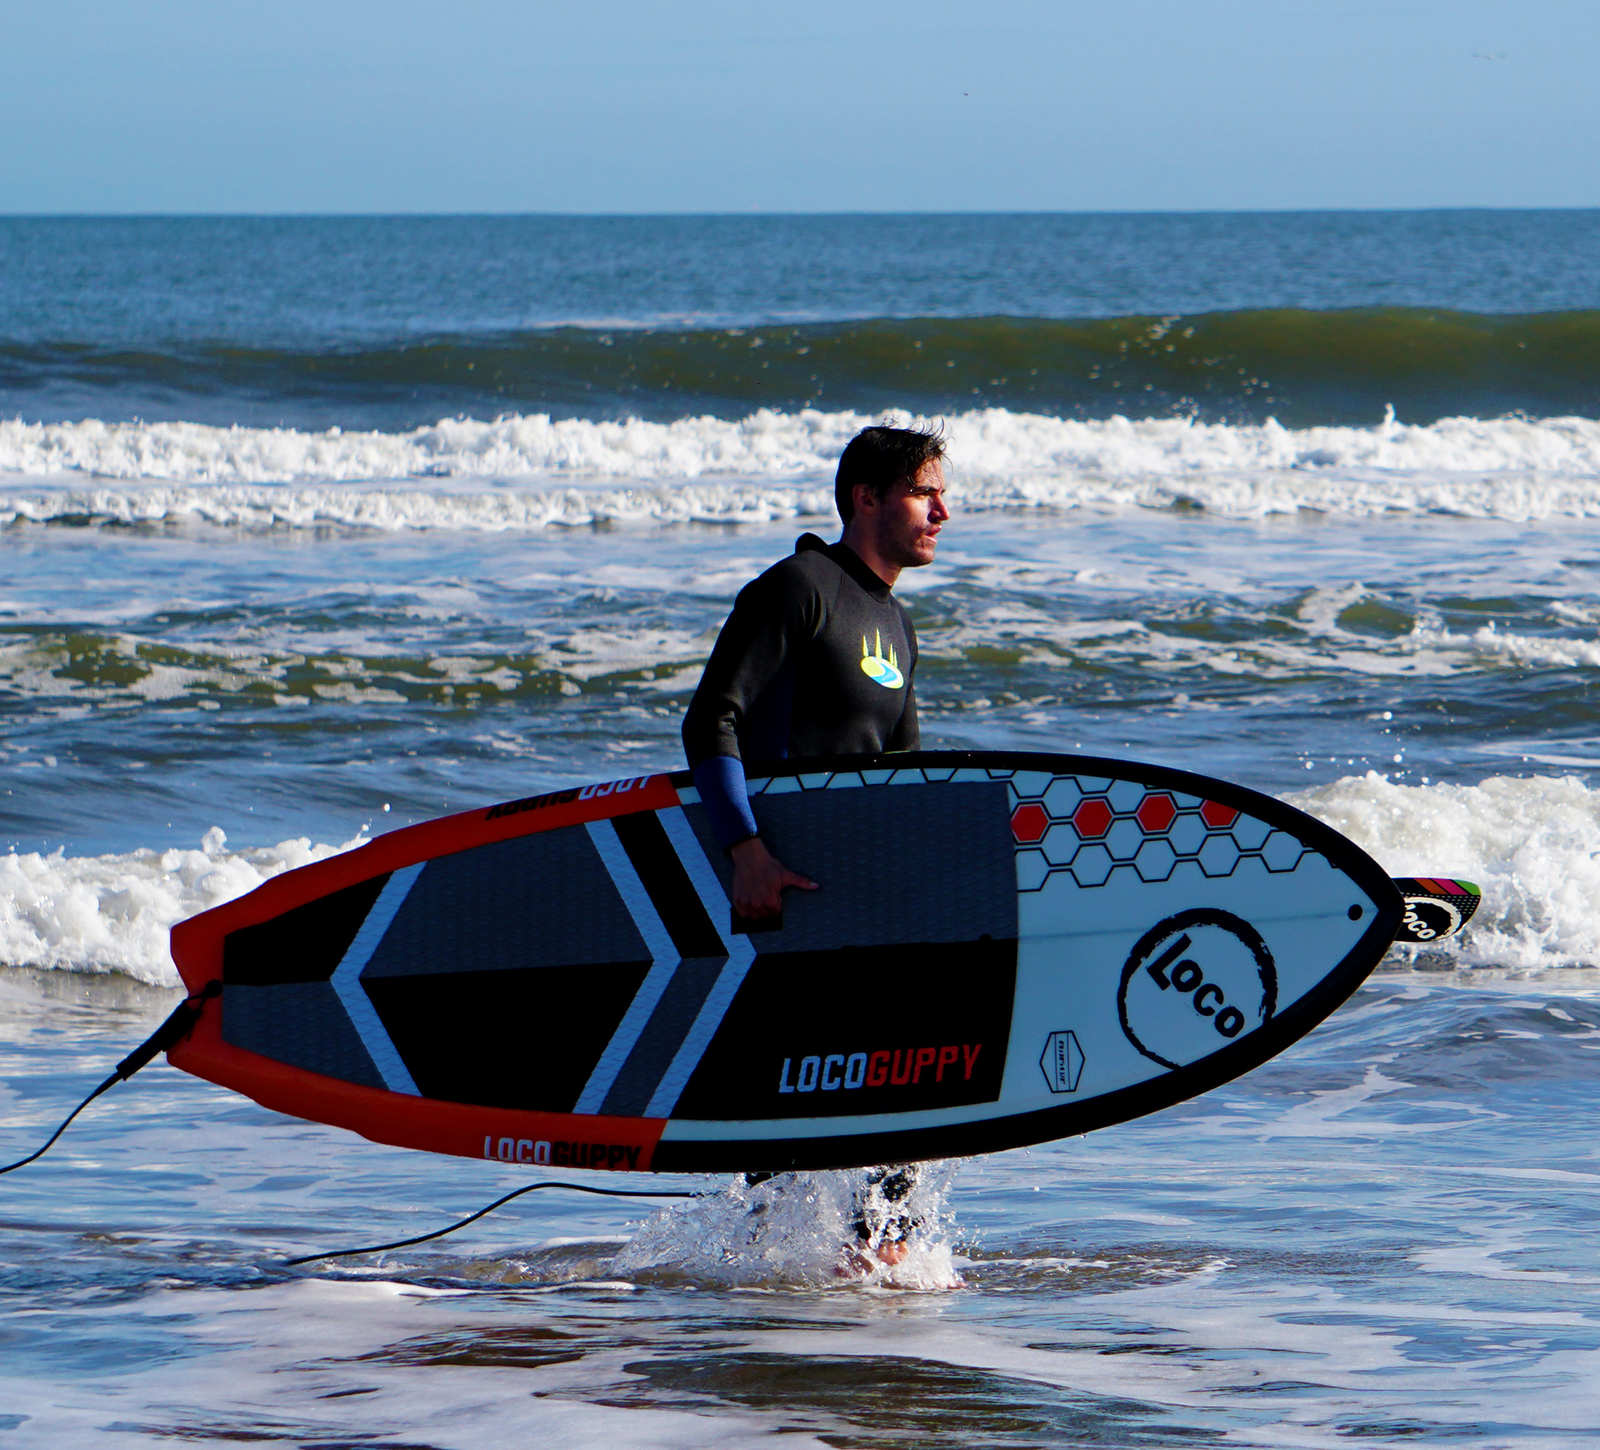 former kook now competent sup surfer